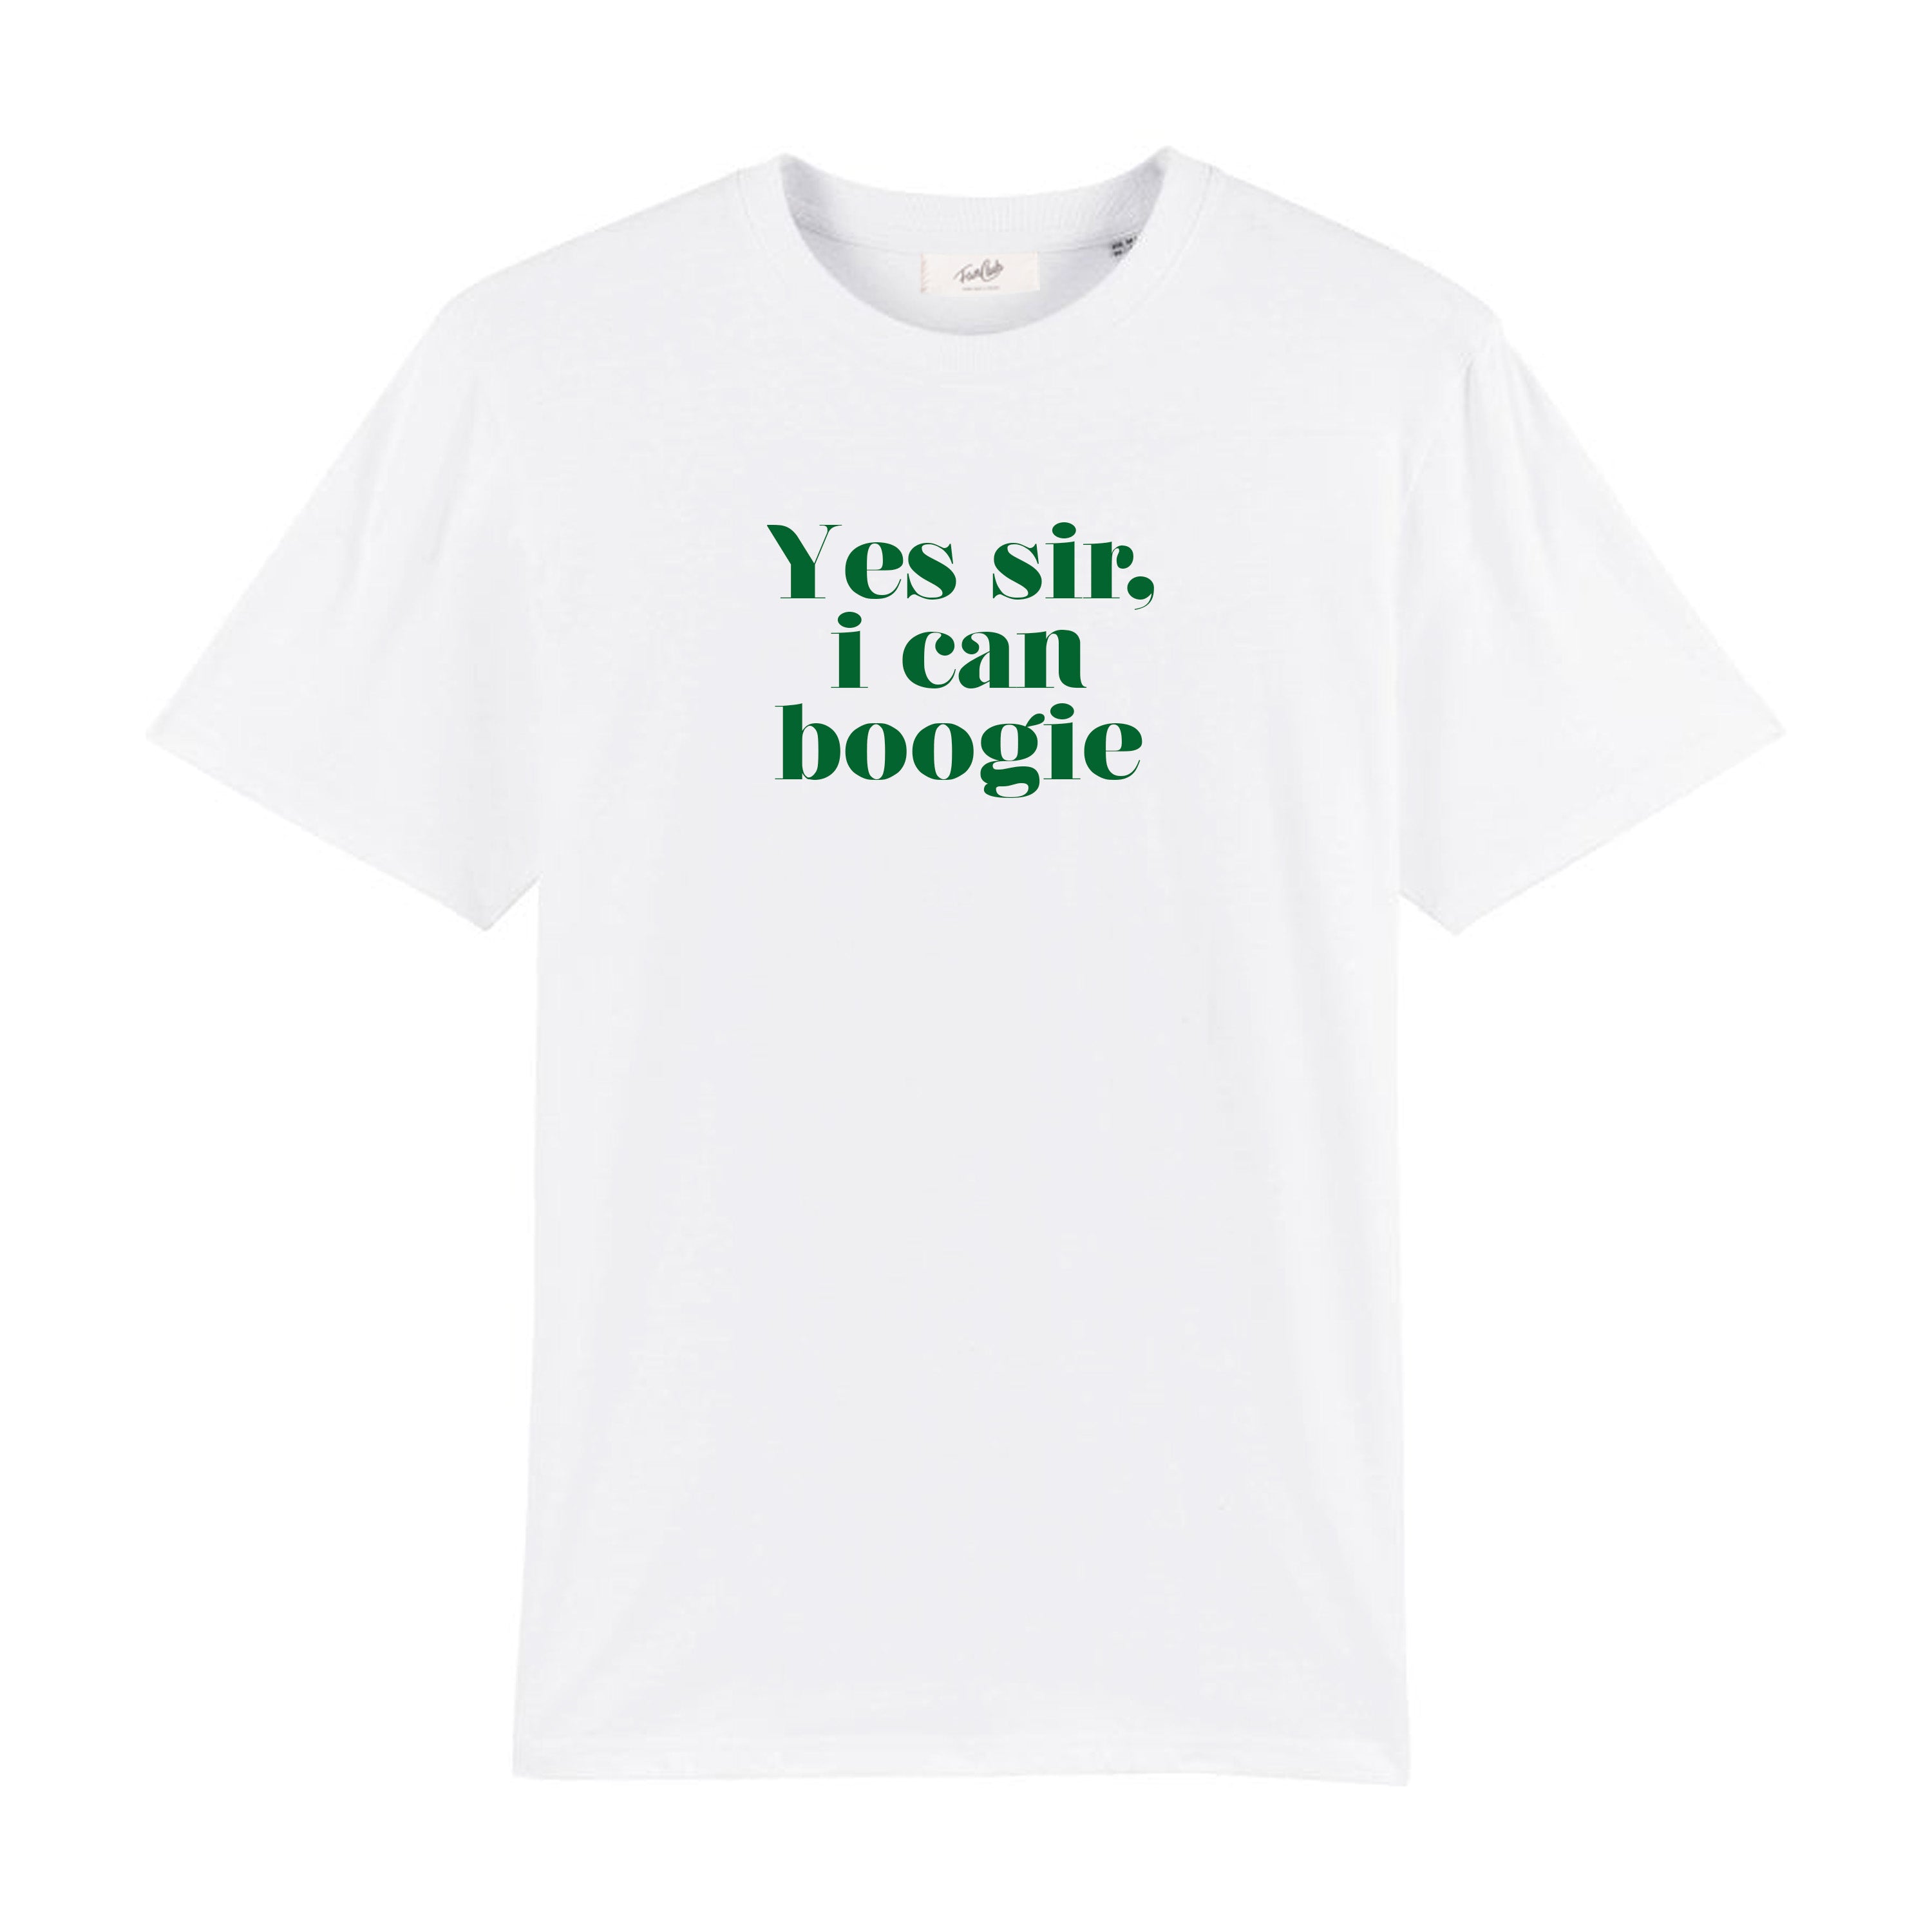 Løve Våd Generel Yes sir I can Boogie oversized retro slogan t-shirt – Fanclub clothing  Limited